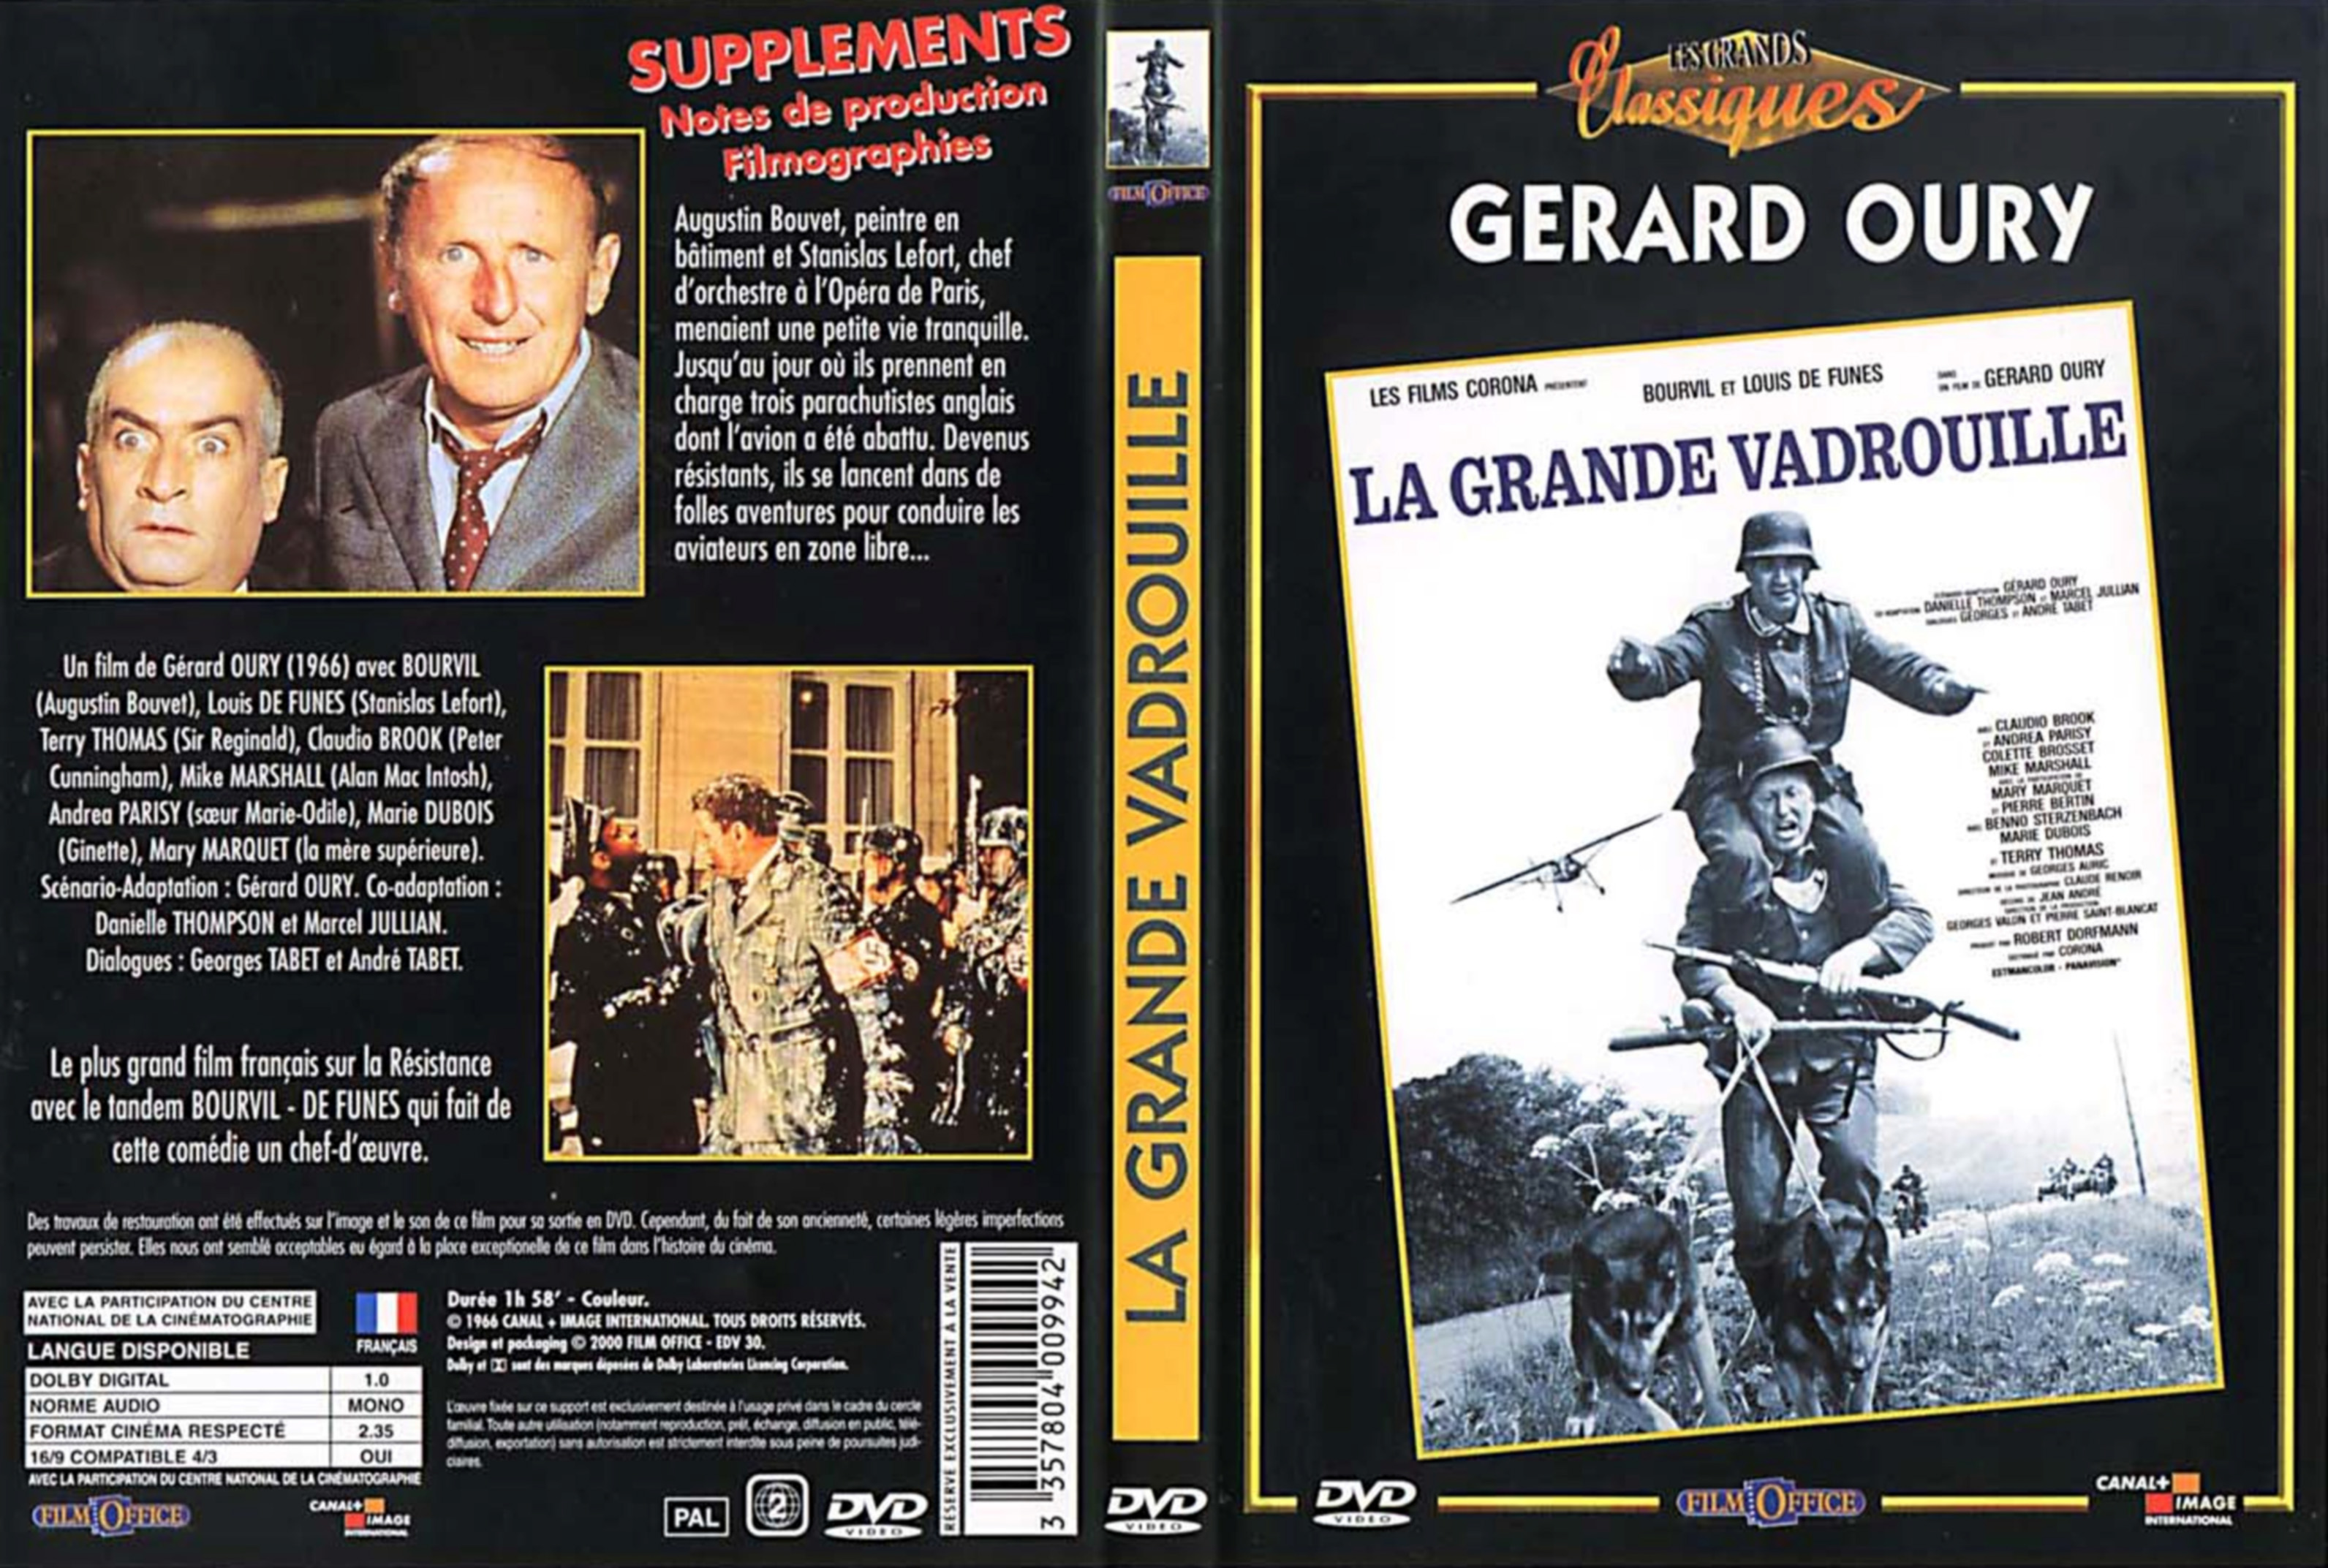 Jaquette DVD La grande vadrouille v3